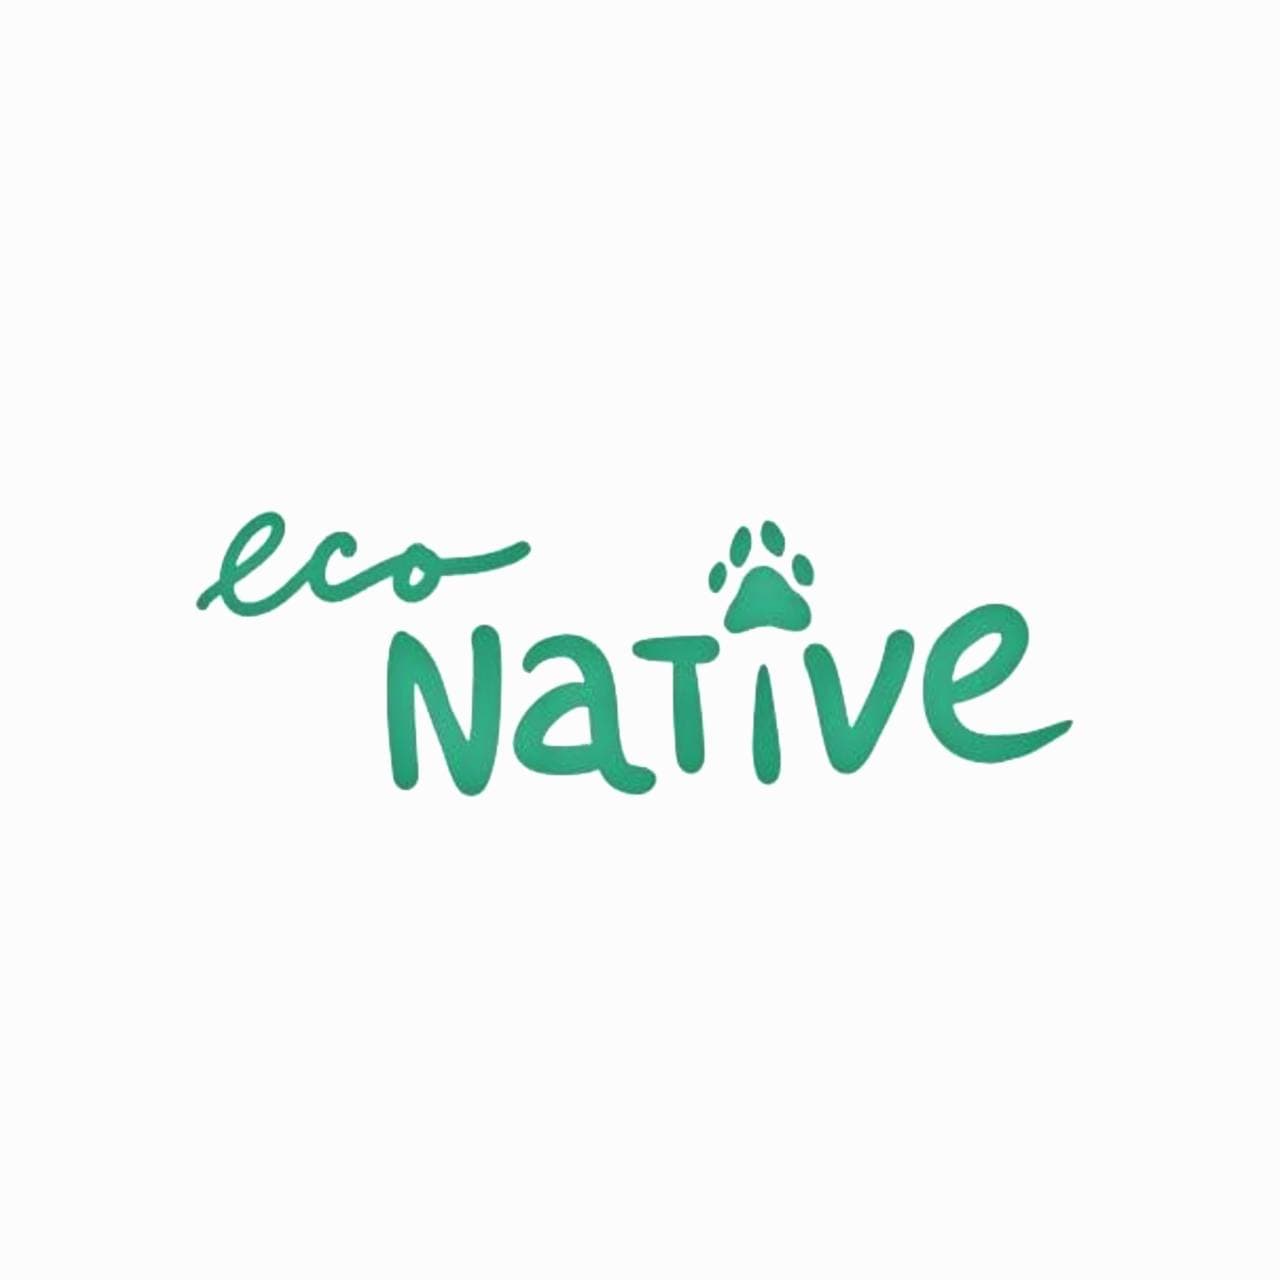 Blue native корм для собак. Собачий корм Eco native. Блю нейтив корм логотип.